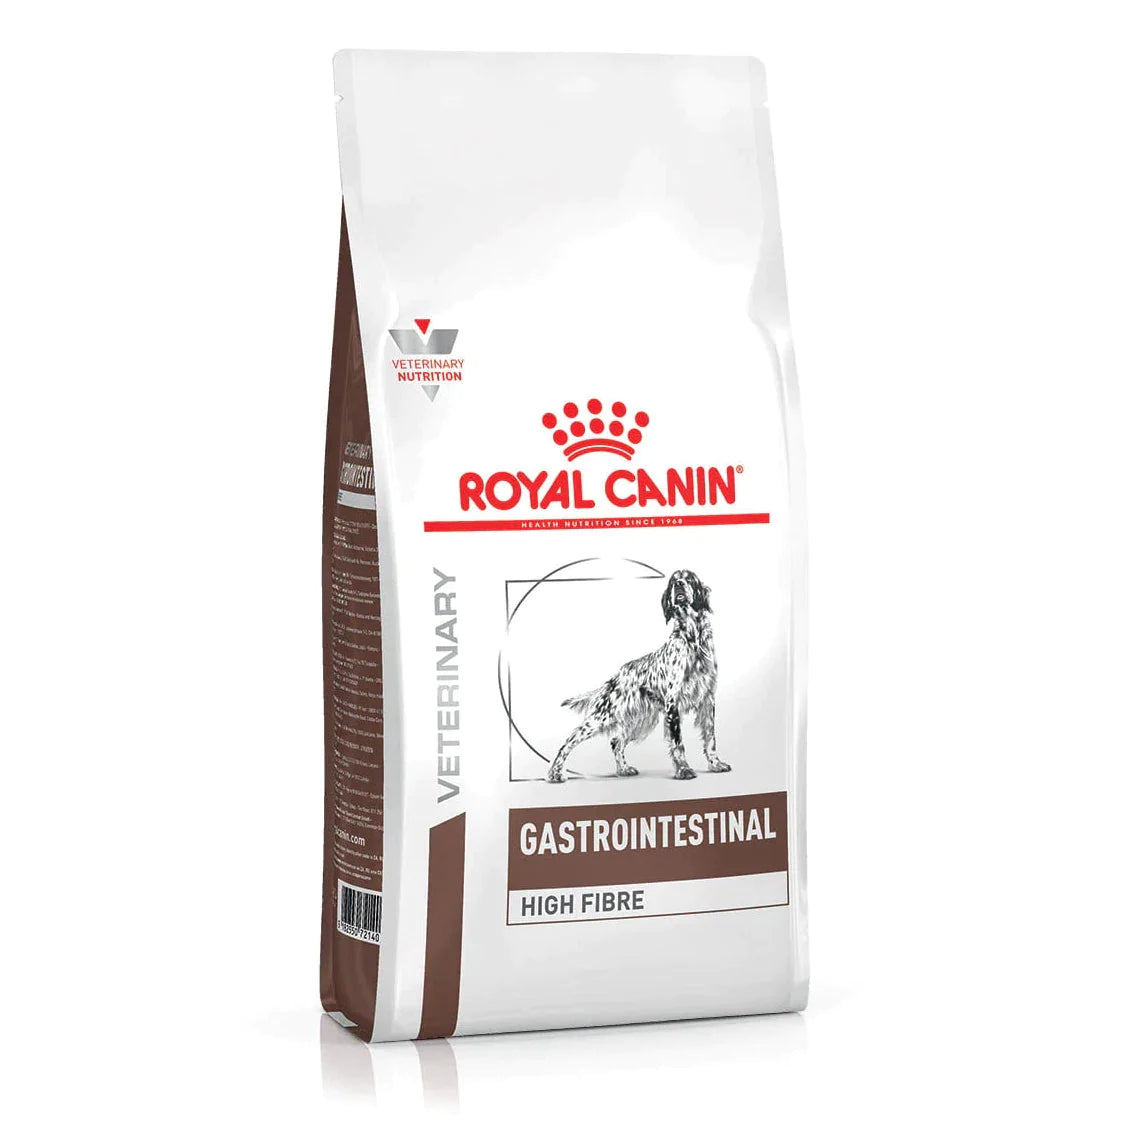 ROYAL CANIN - 成犬腸胃道高纖處方糧 CANINE HIGH FIBRE 2KG 裝 [歐洲直送 | 平行進口 | 最佳食用日期到]